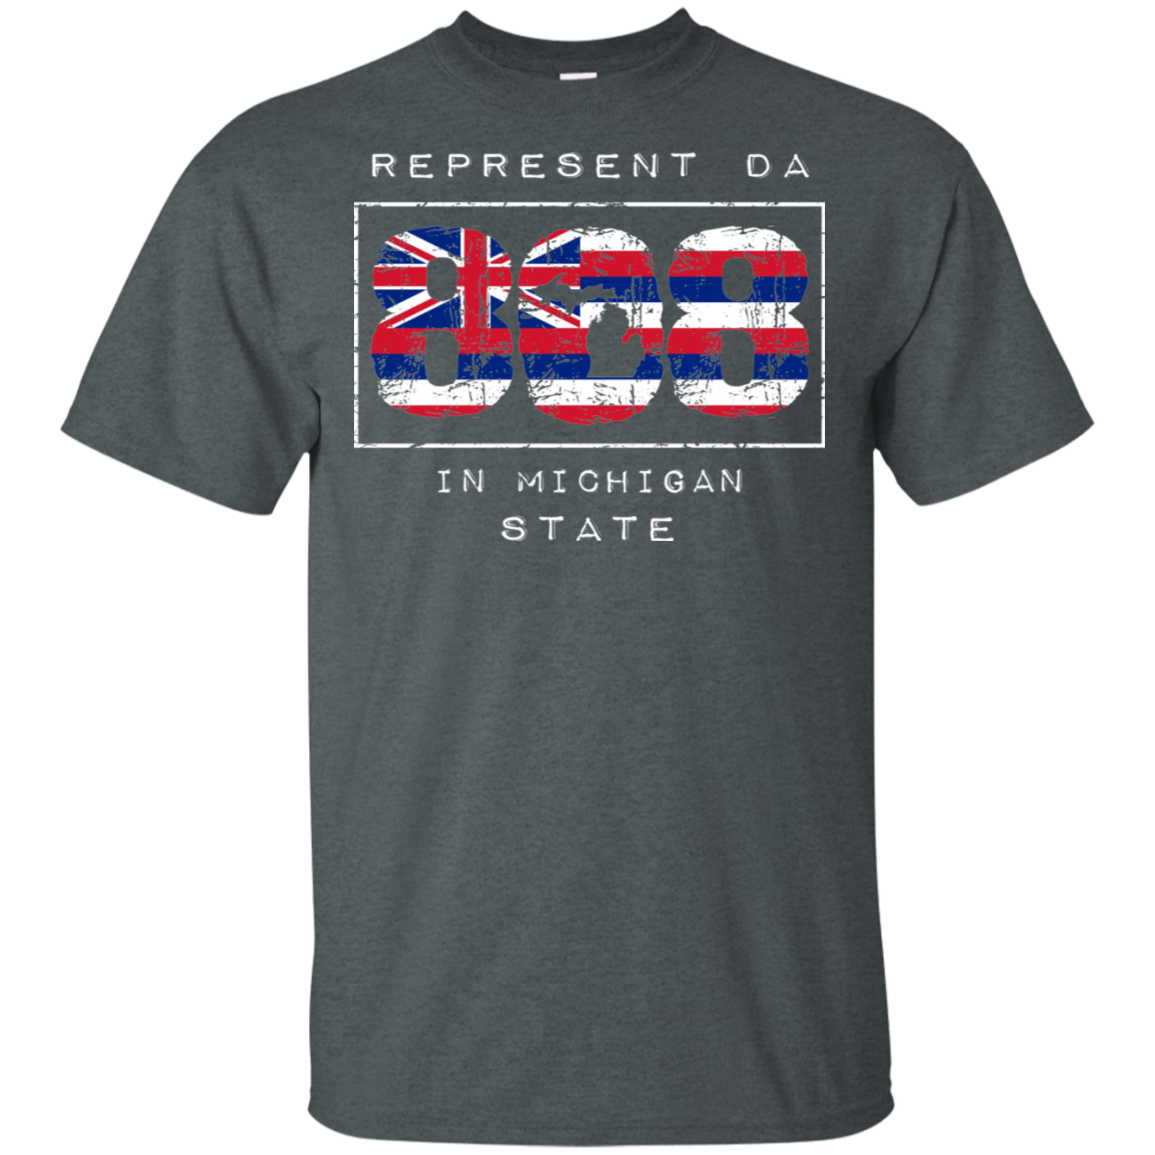 Rep Da 808 In Michigan State Ultra Cotton T-Shirt, T-Shirts, Hawaii Nei All Day